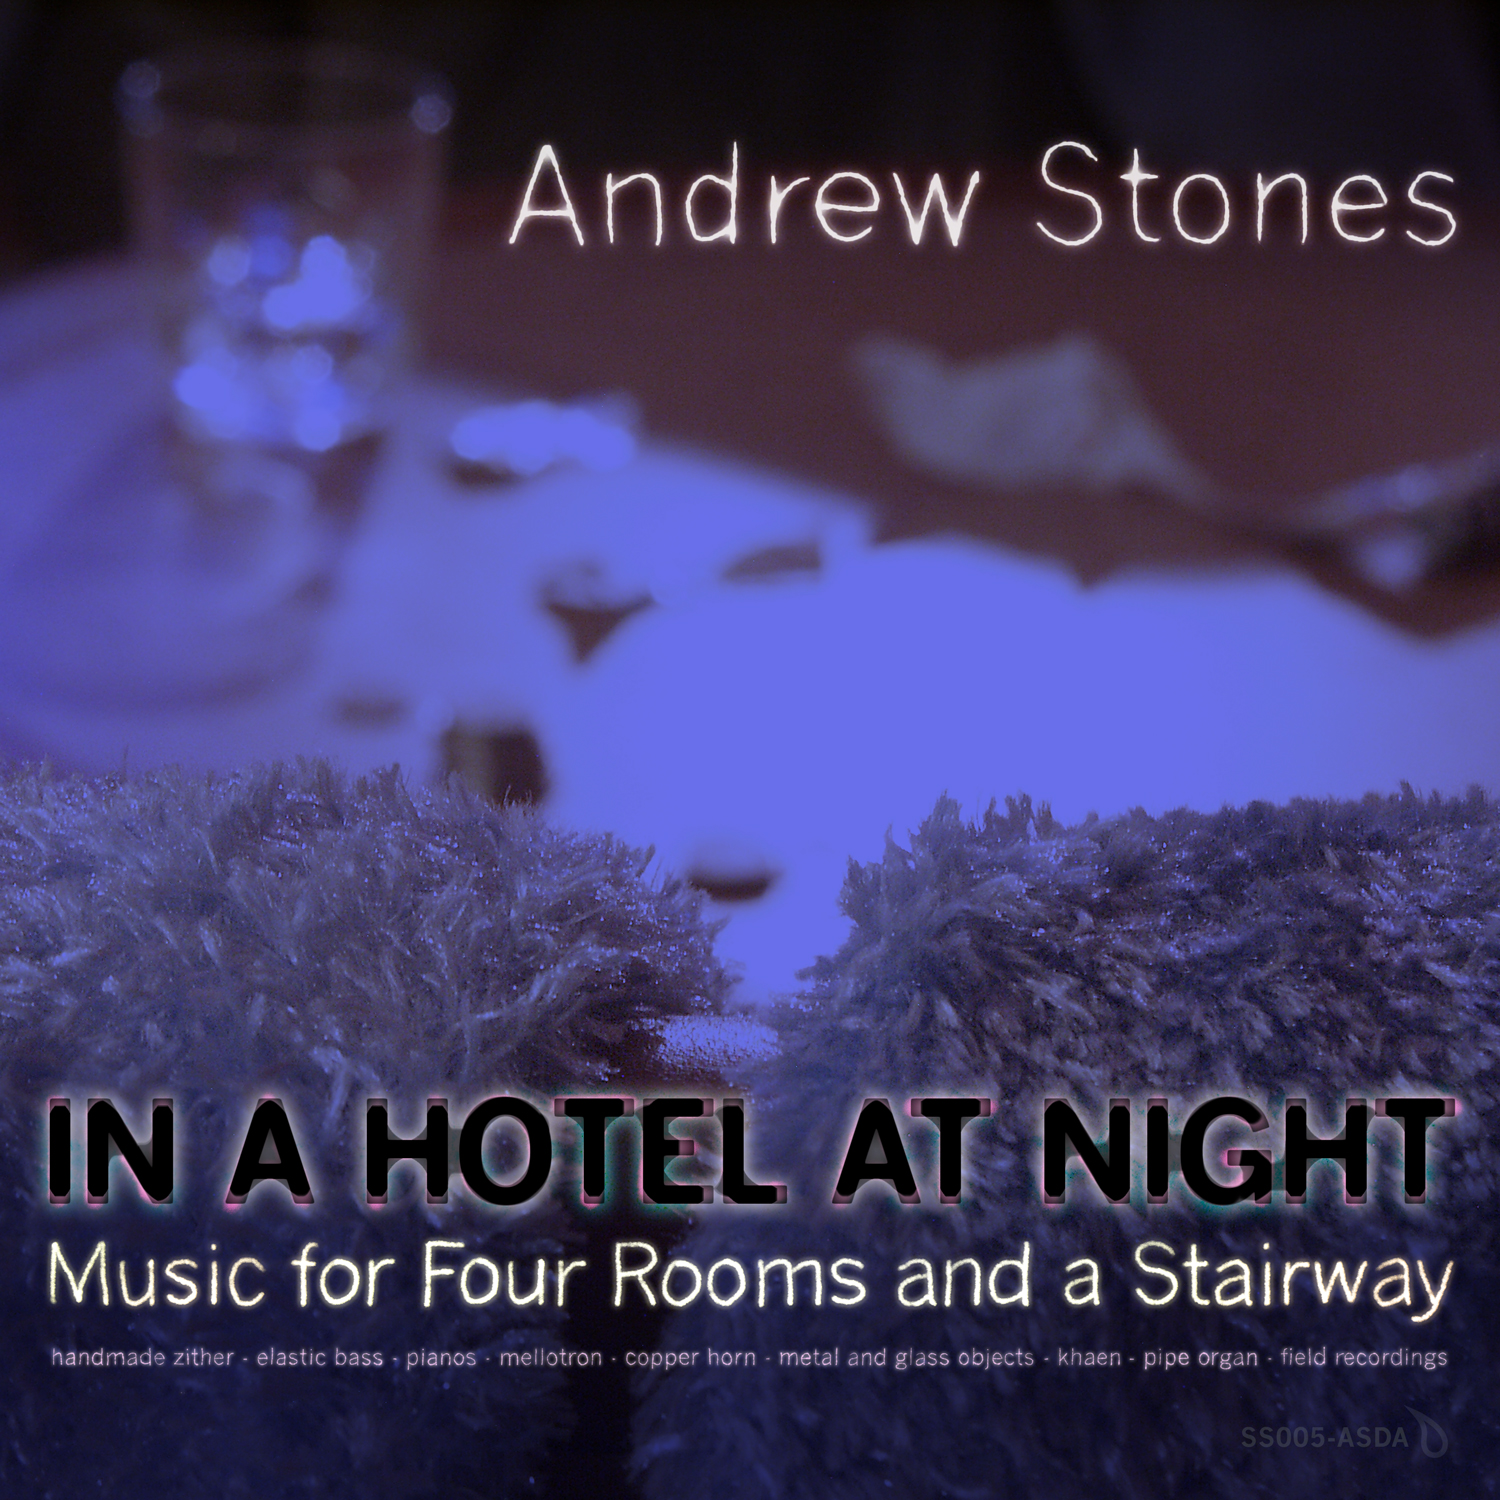 Andrew Stones - In a Hotel At Night. Digital album cover art 2021.